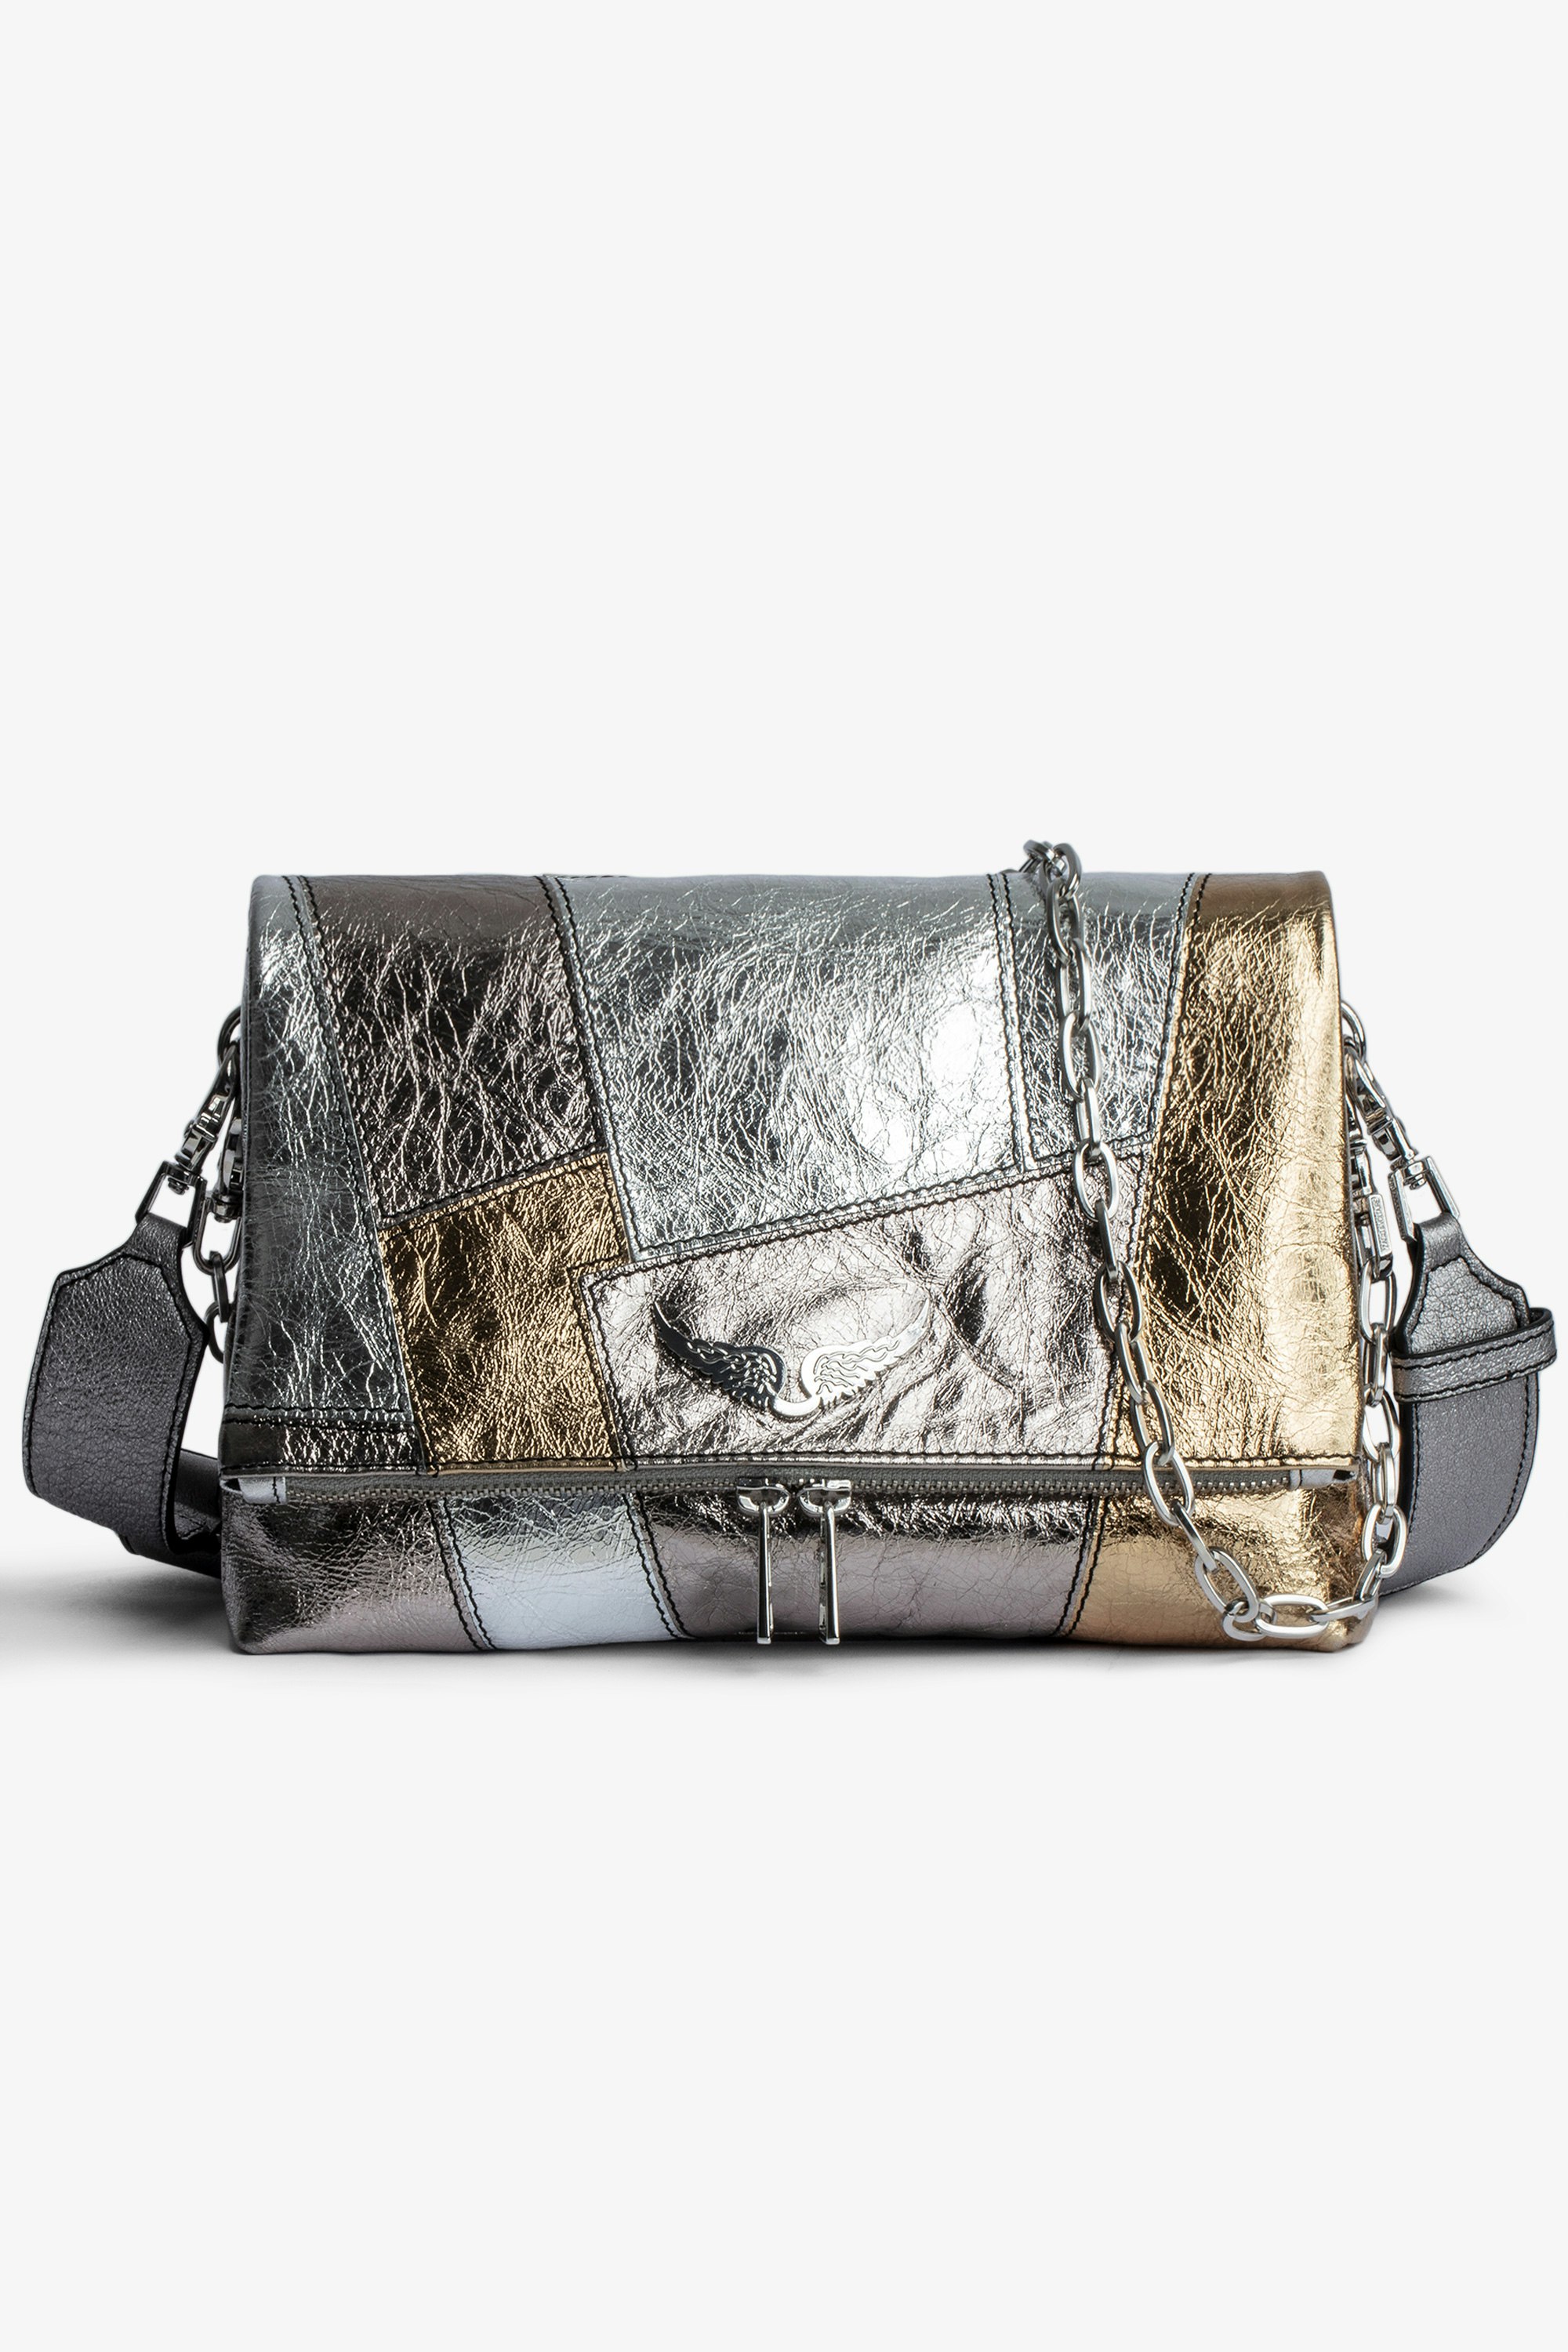 Rocky Vintage Metal Patchwork Bag Women’s shoulder bag in vintage-effect silver and gold metallic leather patchwork 